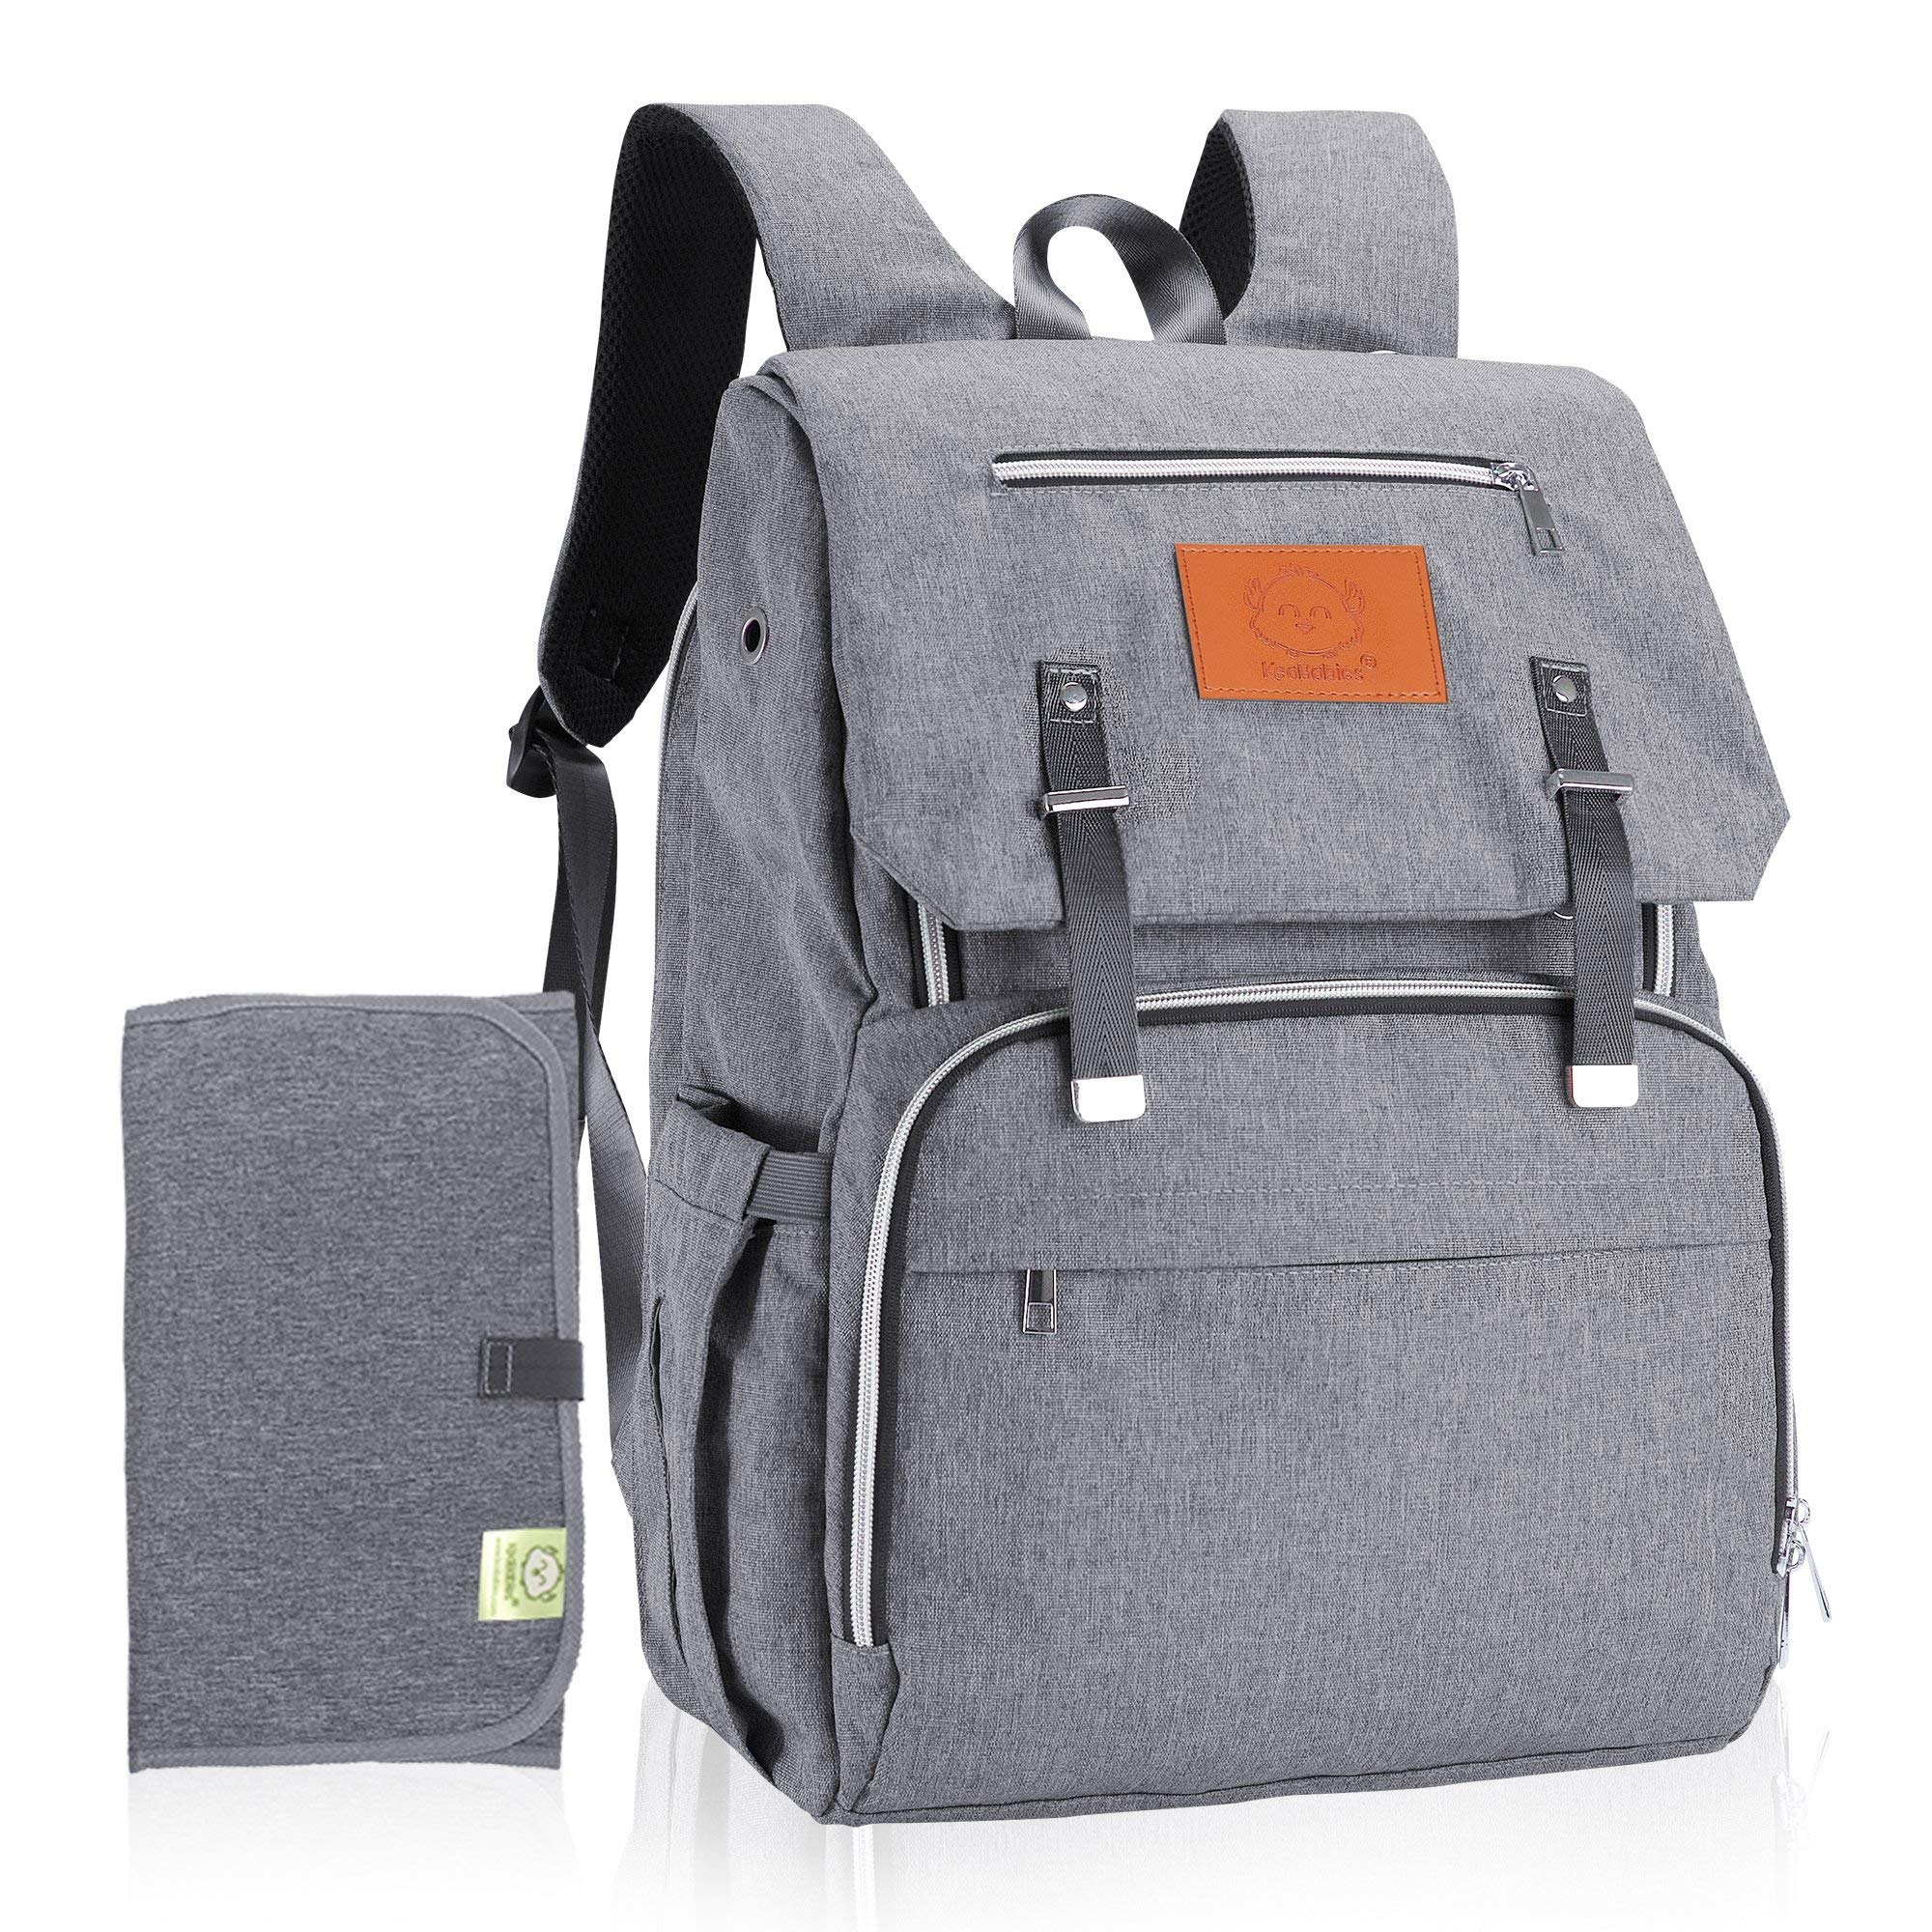 KeaBabies Diaper Bag Backpack, Waterproof Multi Function Baby Travel Bags (Classic Gray)